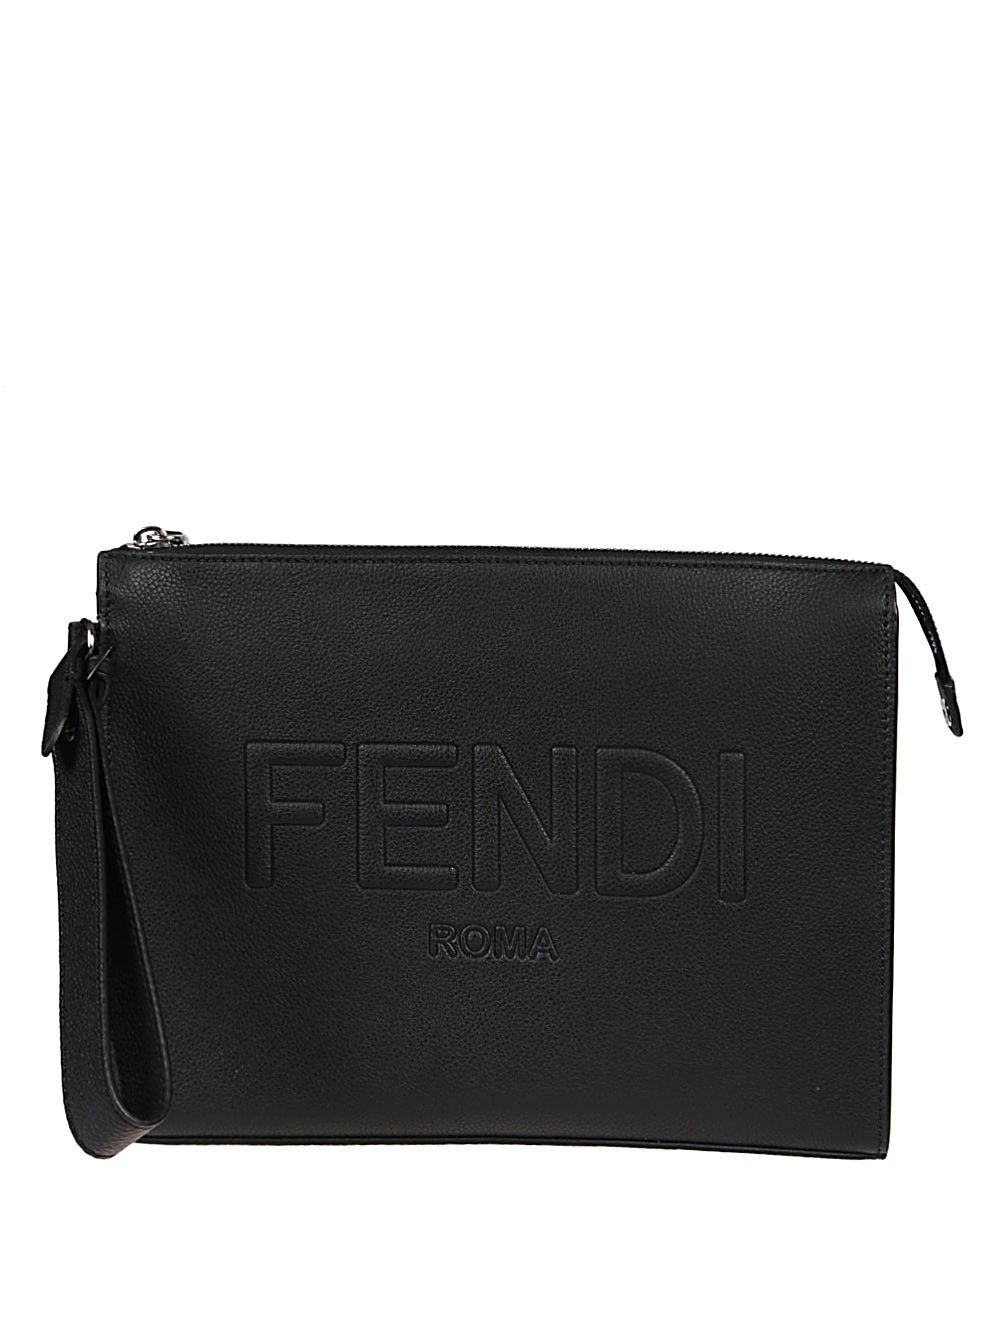 FENDI - Leather Clutch Fendi